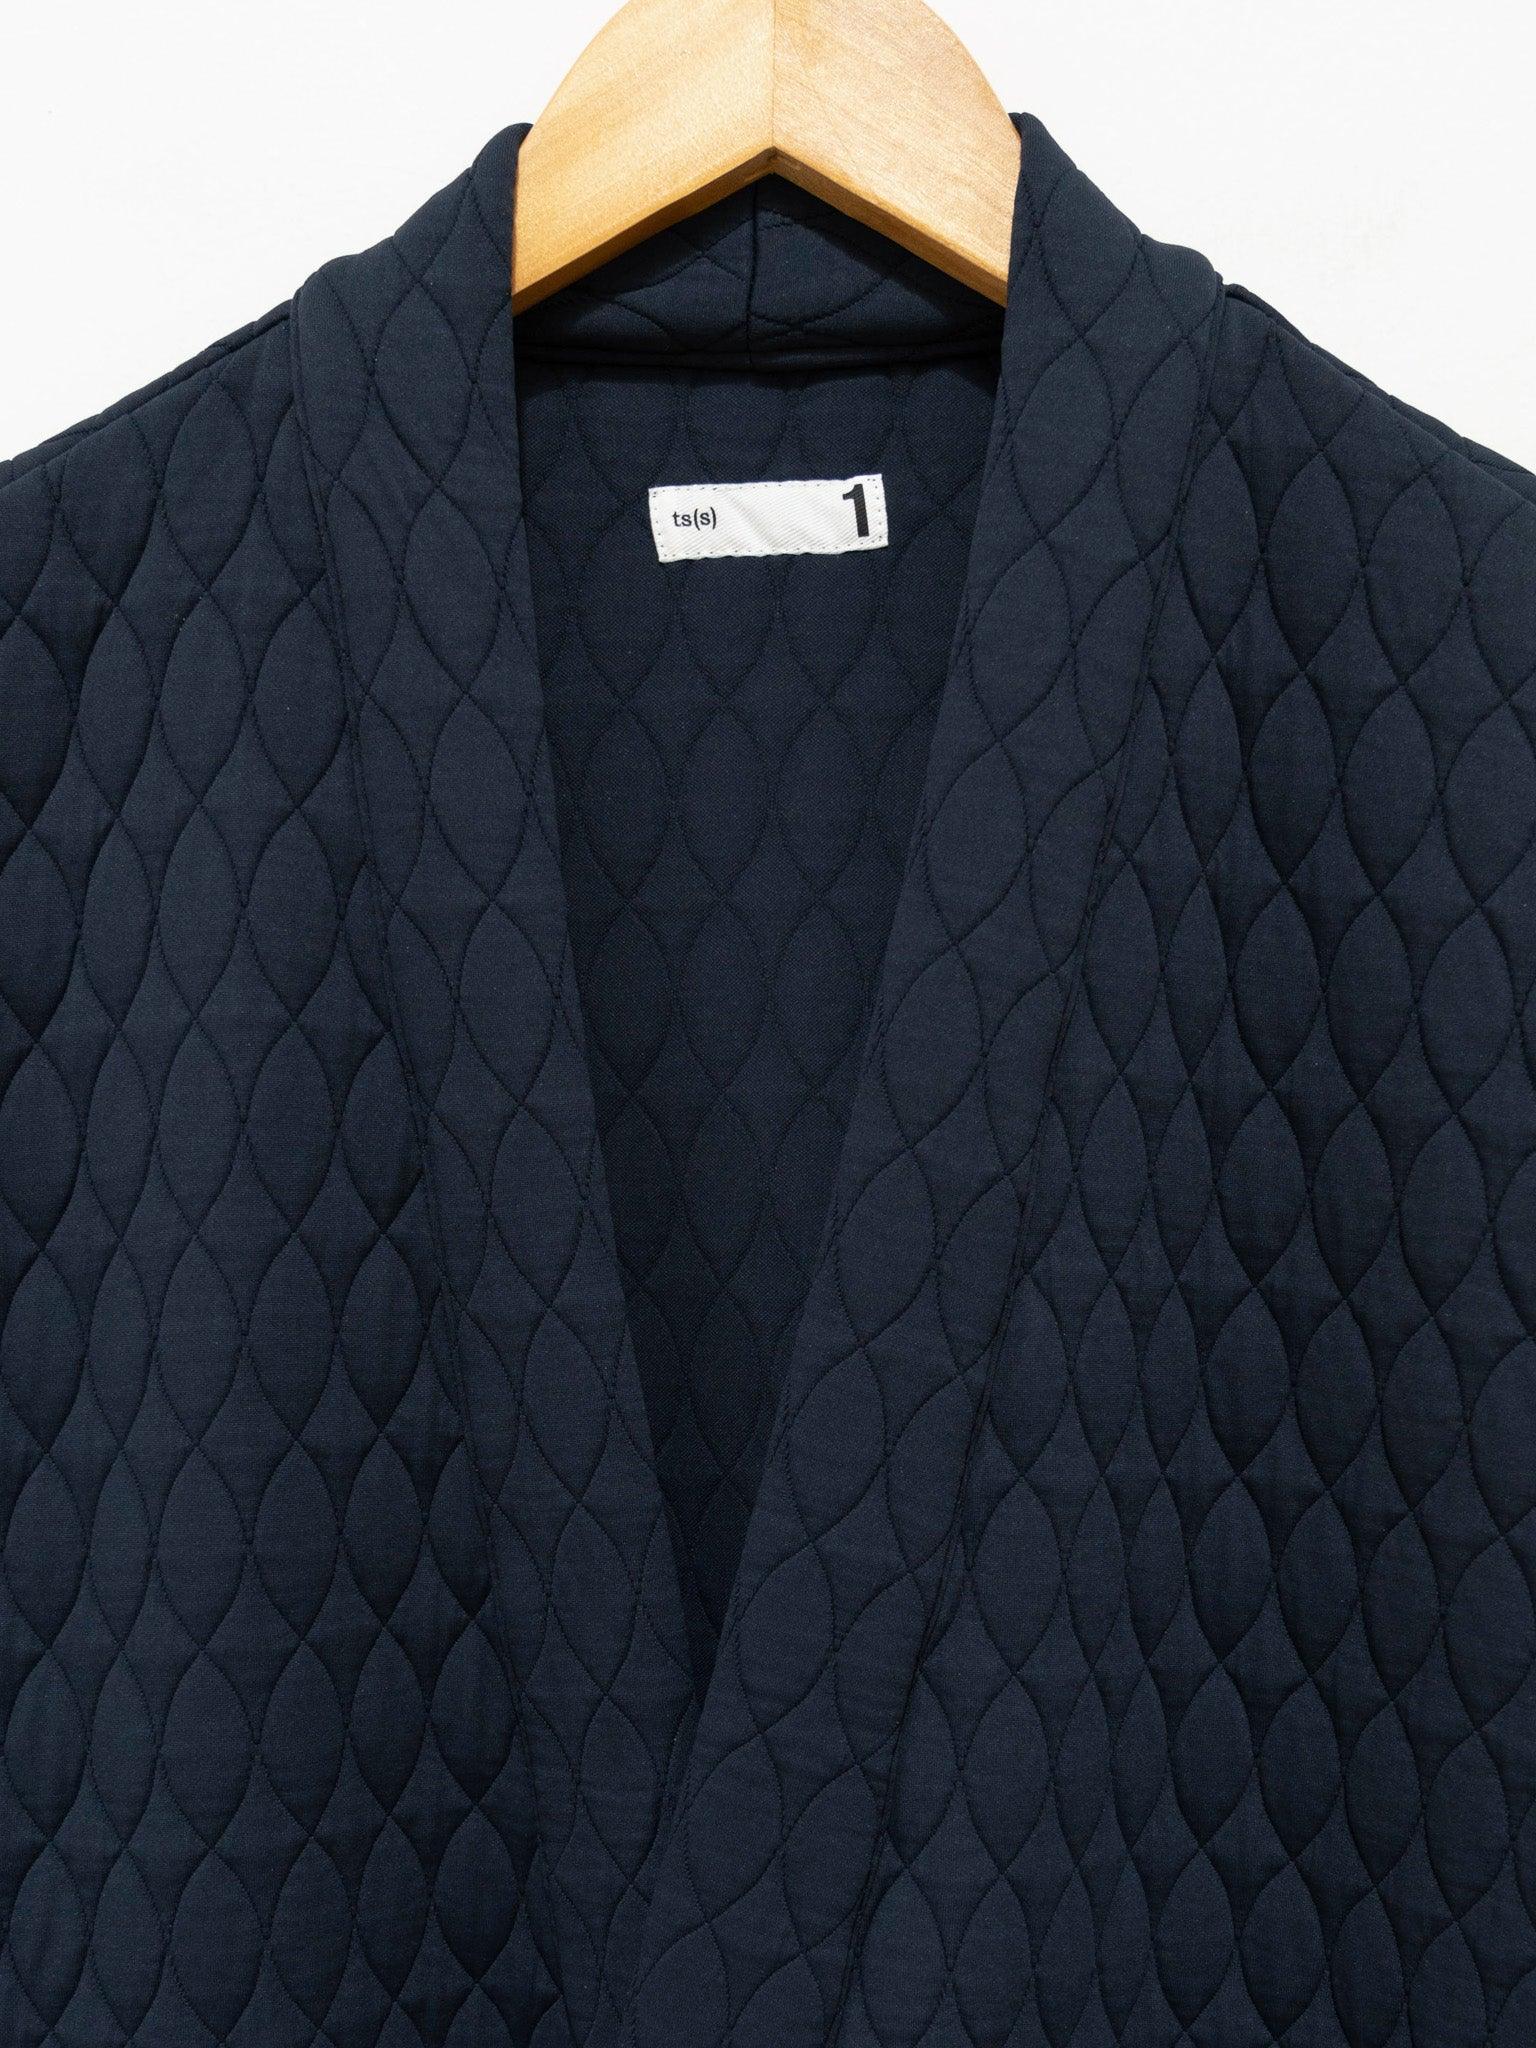 Namu Shop - ts(s) Poly Quilt Jacquard Jersey Easy Cardigan Coat - Navy